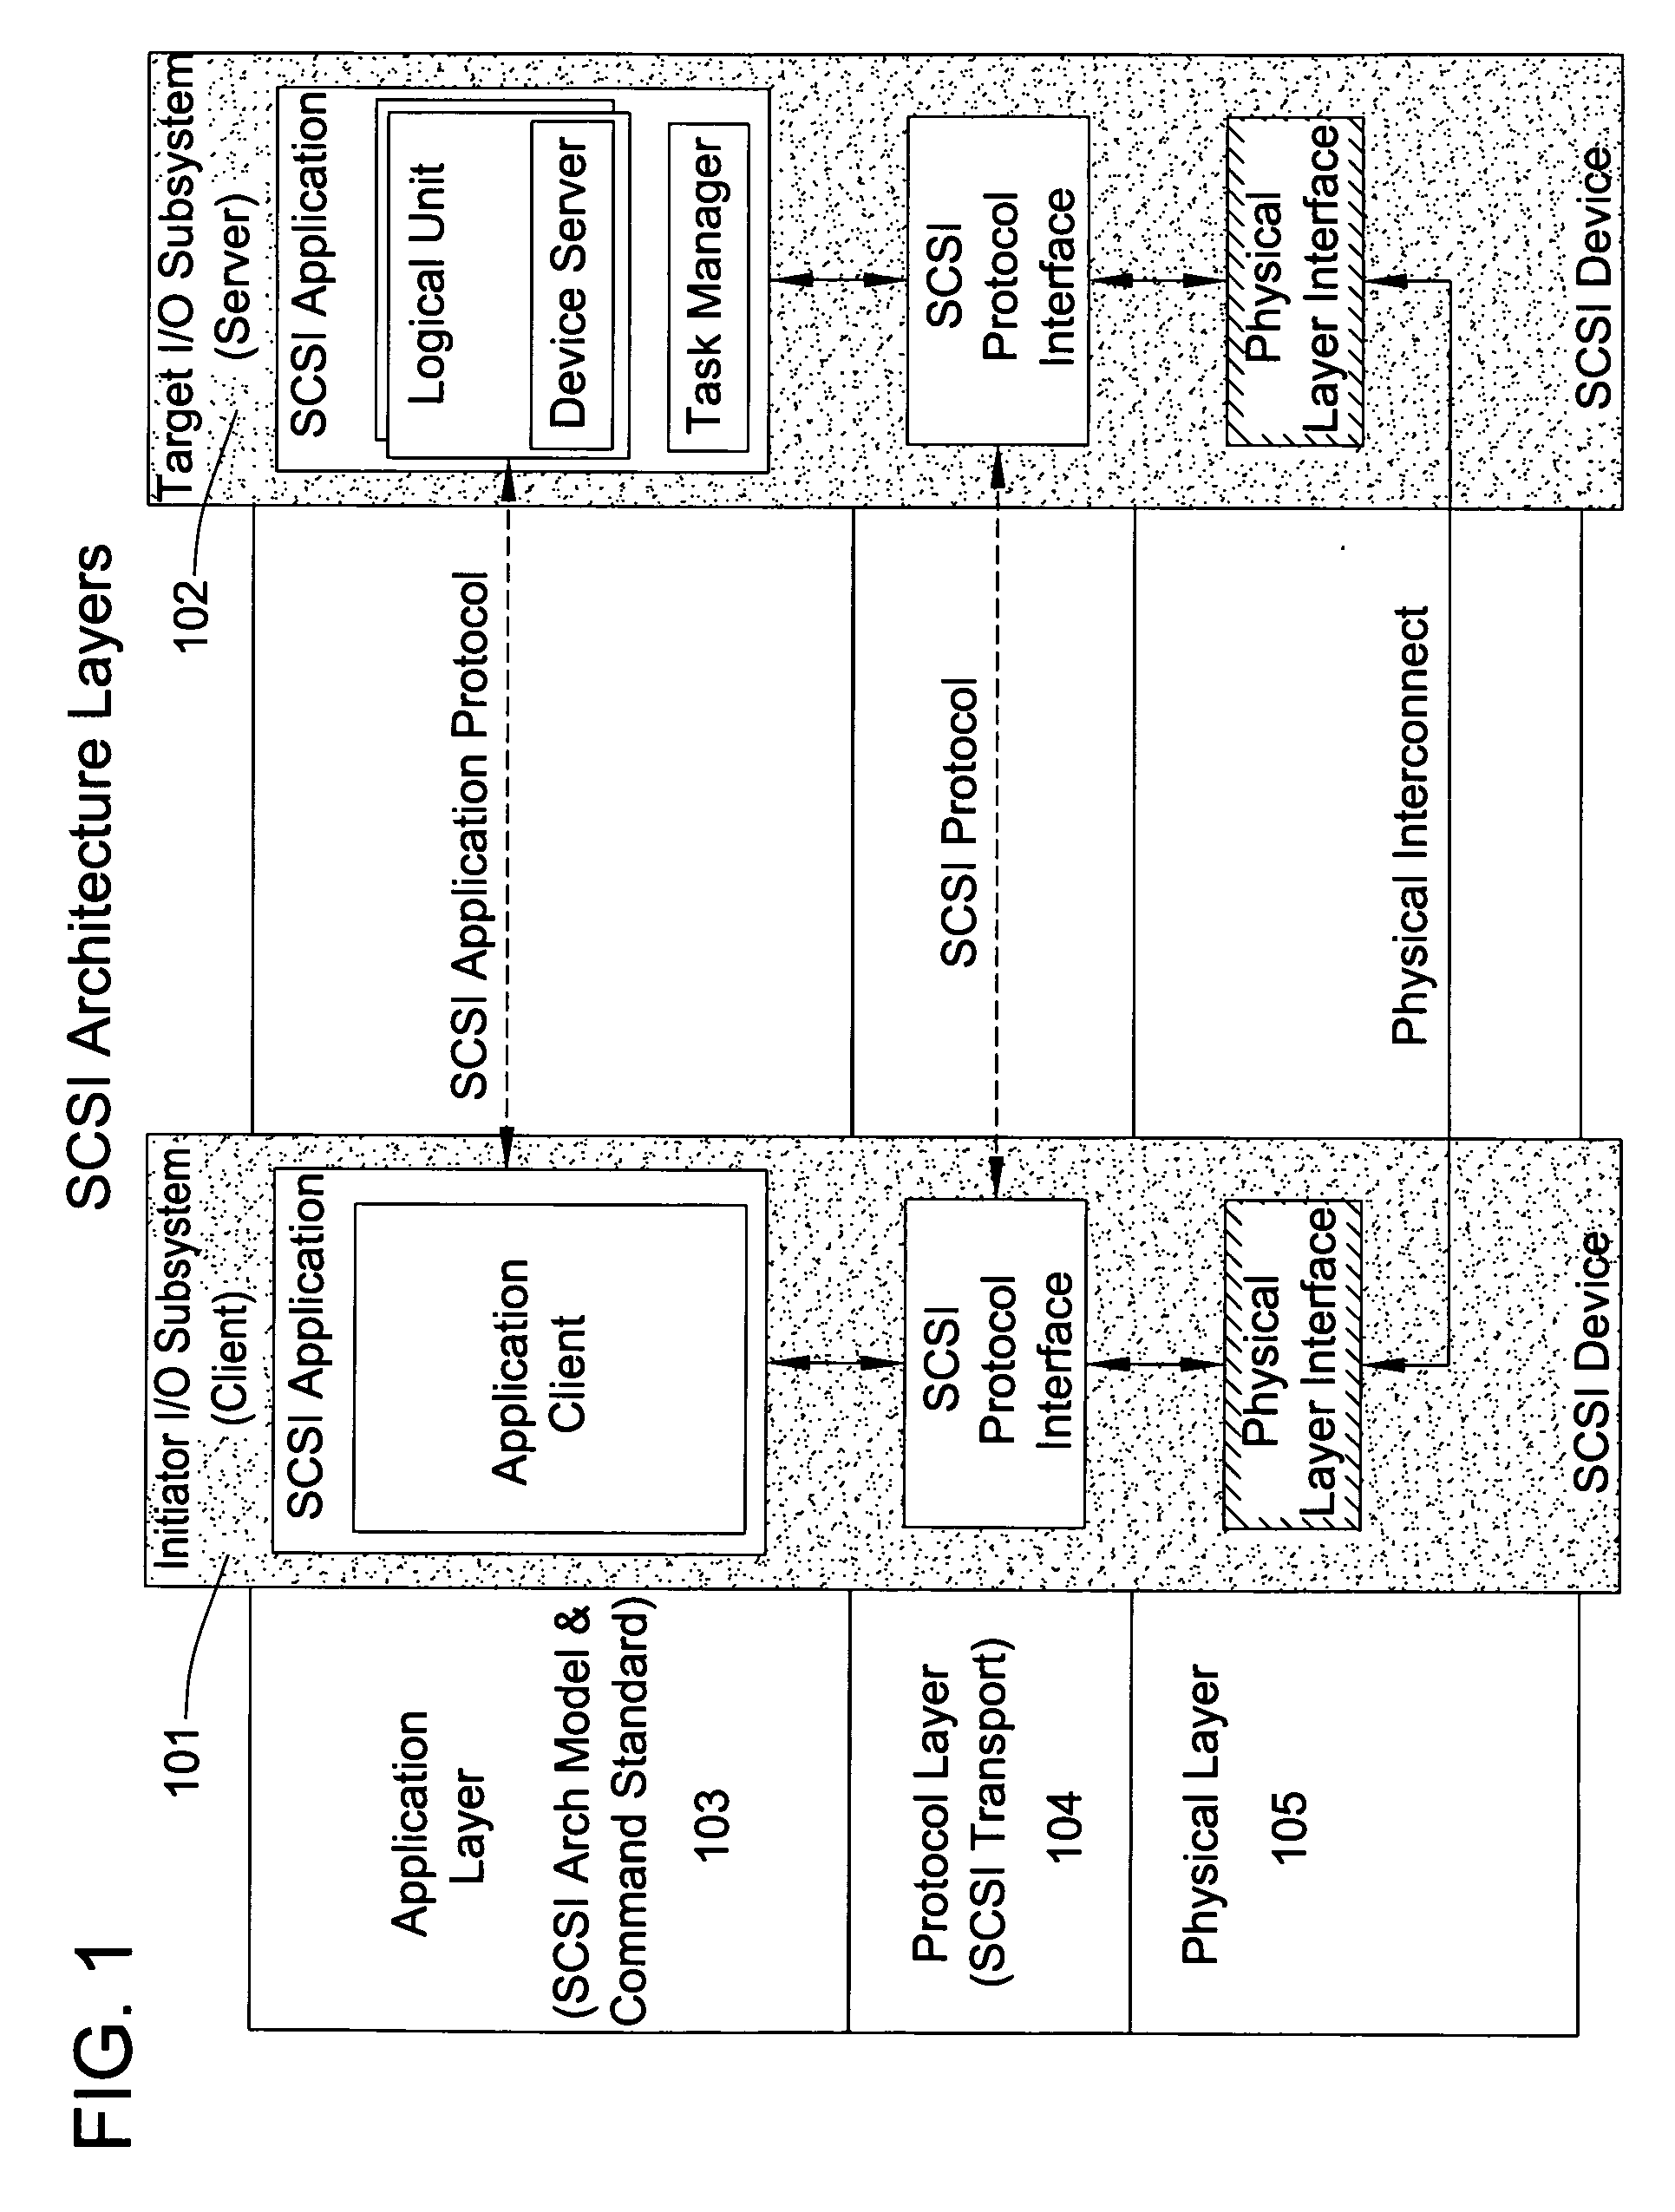 Tcp/ip processor and engine using rdma